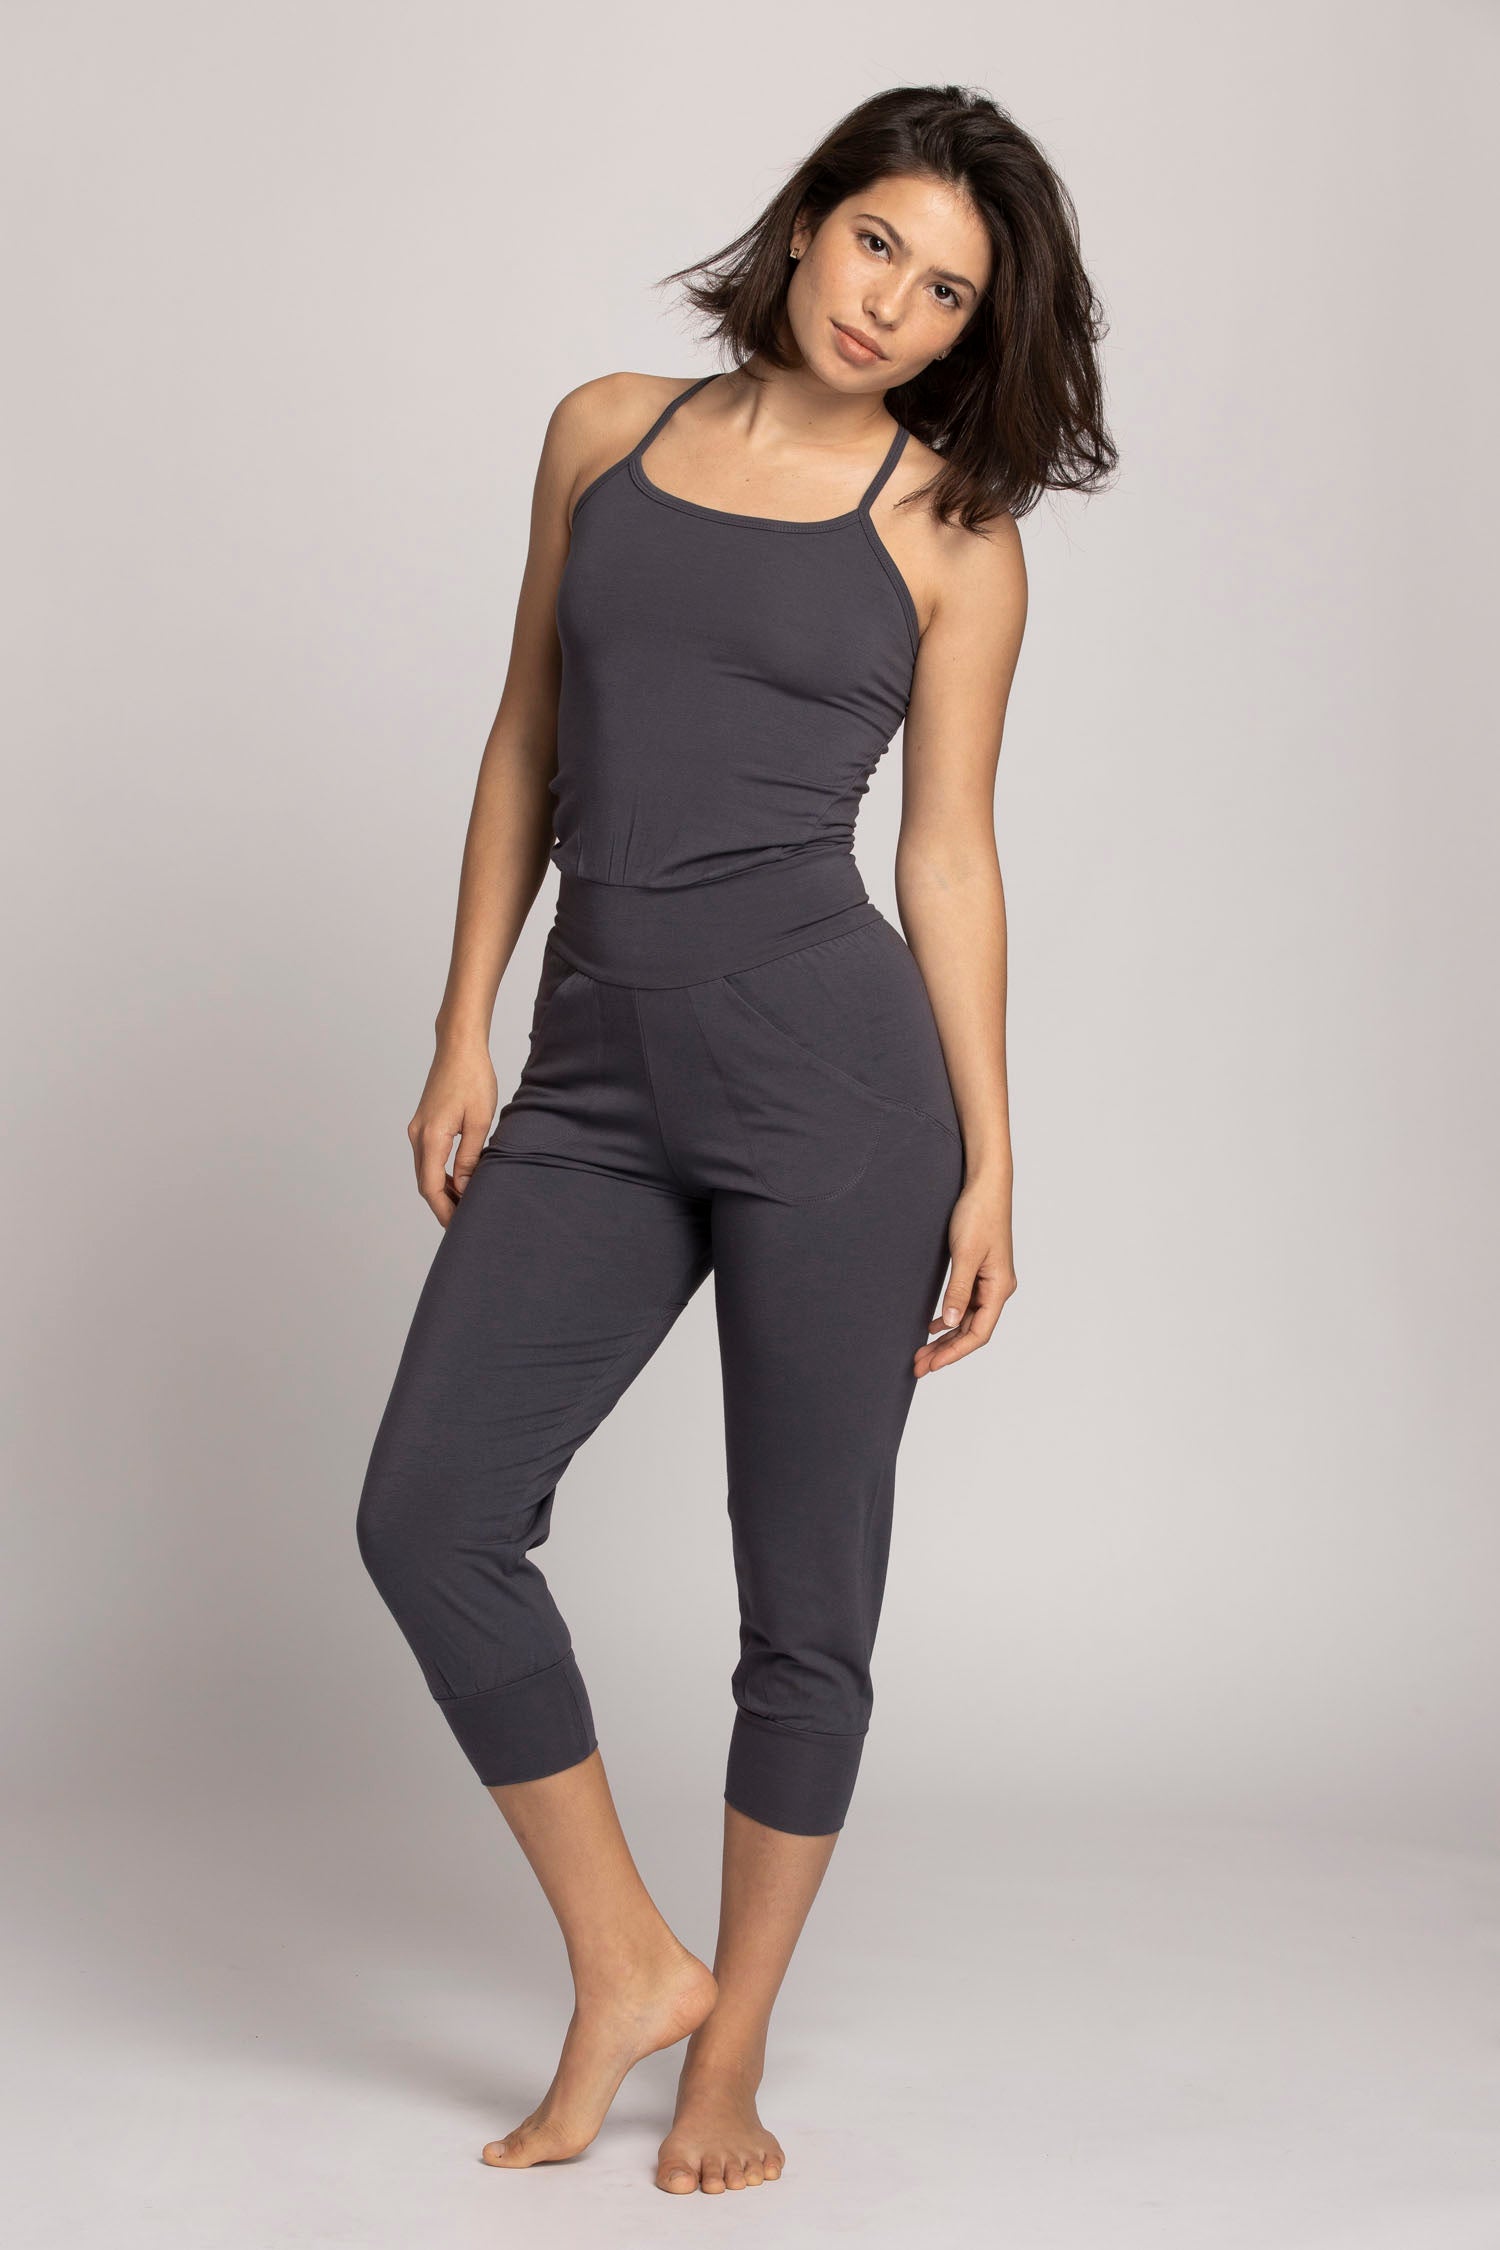 YUNAFFT Yoga Pants for Women Clearance Plus Size Fashion Women Casual Cold  Shoulder Jumpsuit Solid Button Suspender Jumpsuits Wide Pocket Leg Pant 